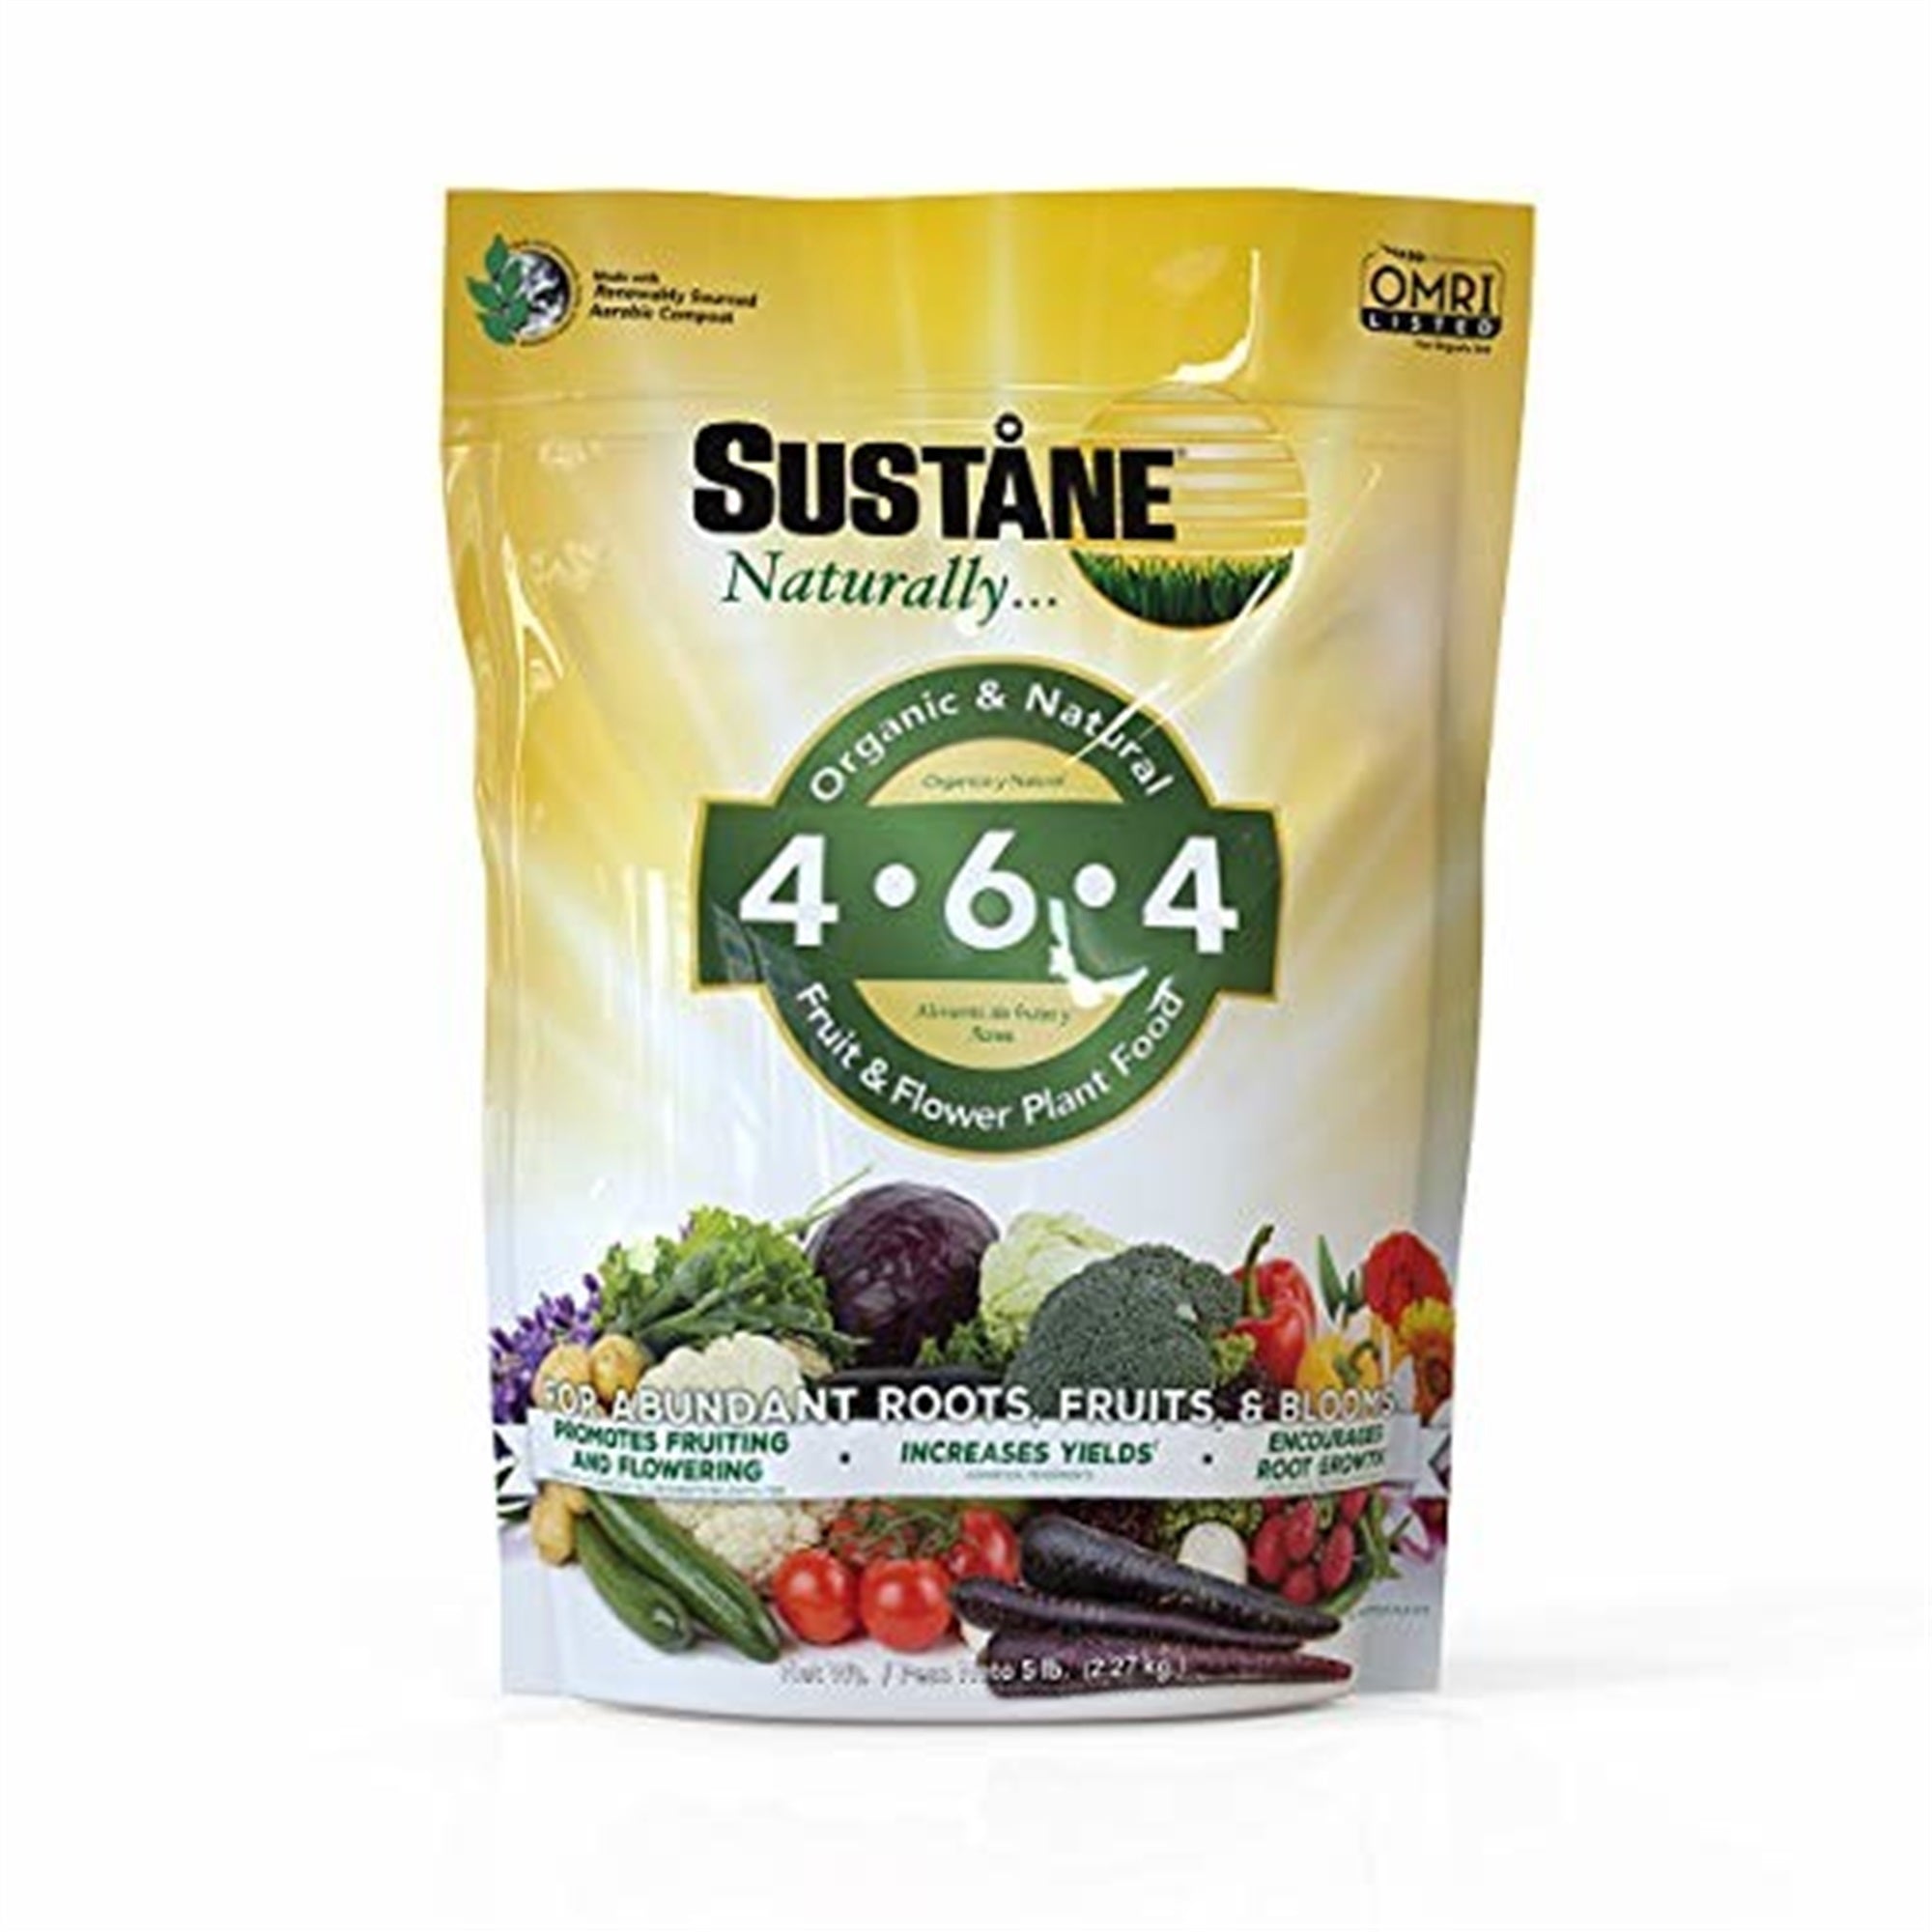 Sustane 4-6-4 Organic & Natural Fruit & Flower Plant Food Fertilizer- 5lb.